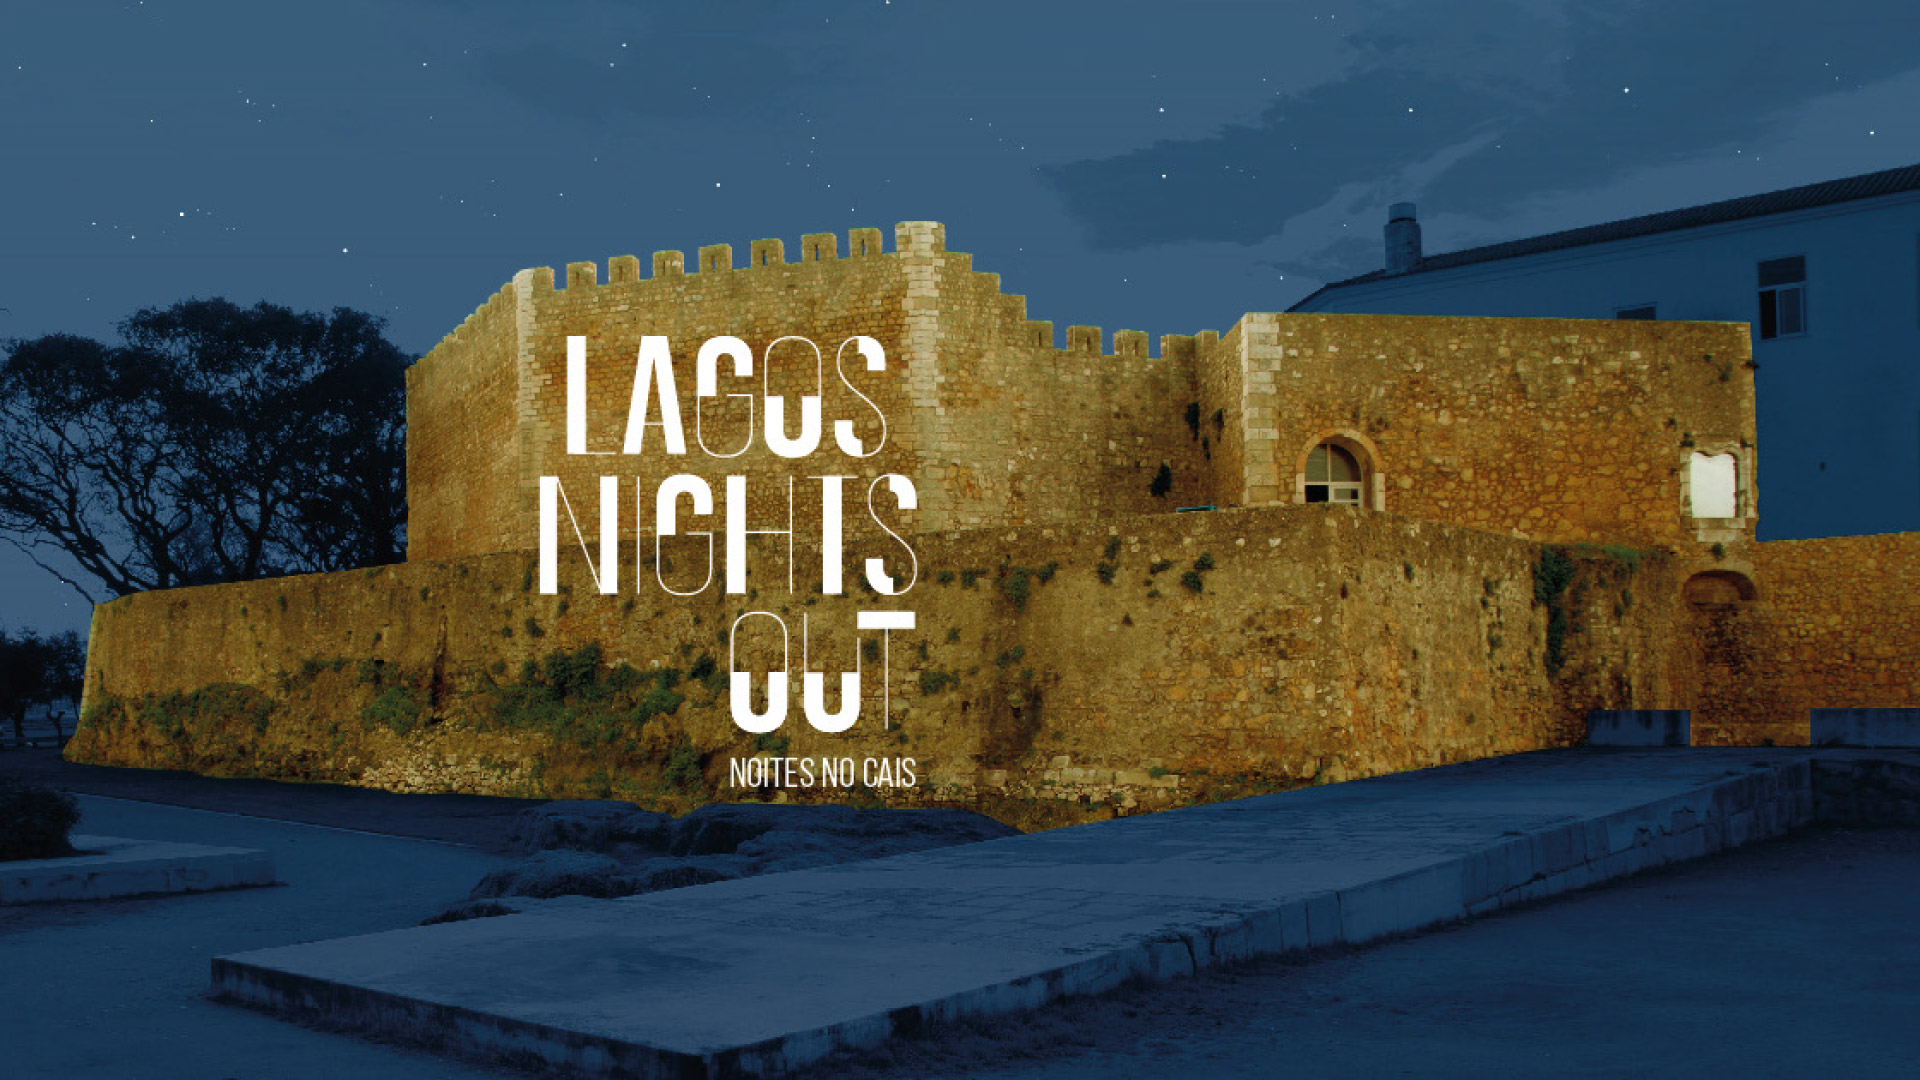 Lagos Nights Out: Noites no Cais volta a brilhar